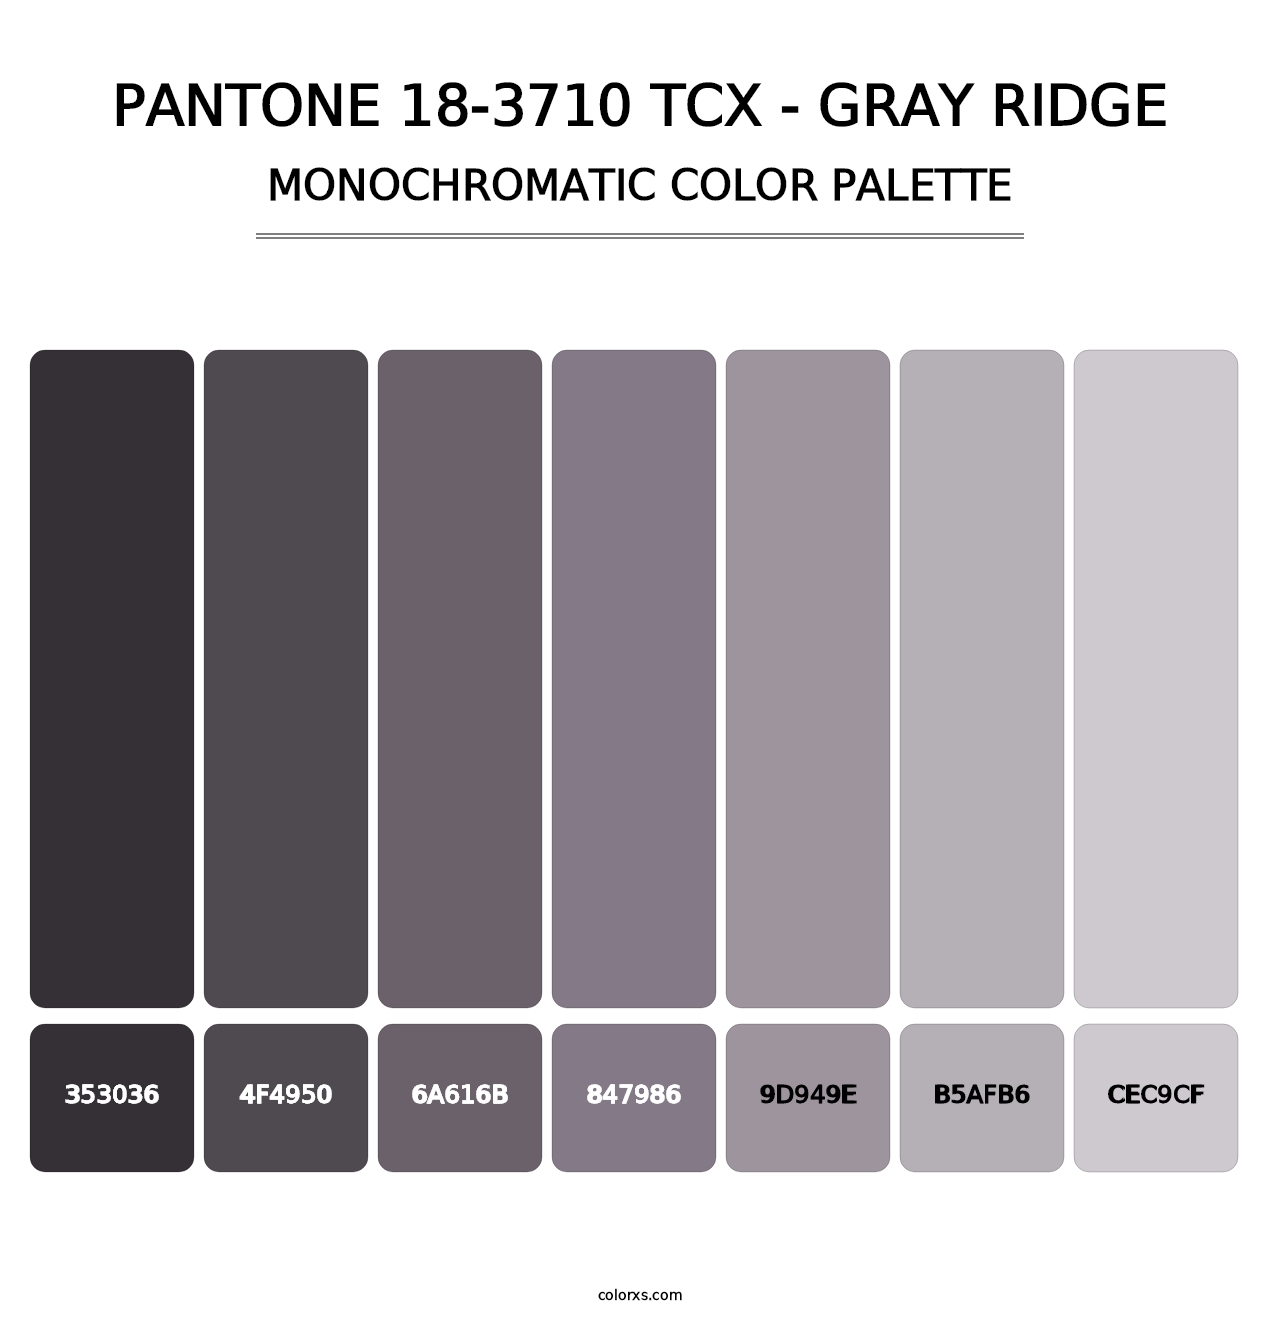 PANTONE 18-3710 TCX - Gray Ridge - Monochromatic Color Palette